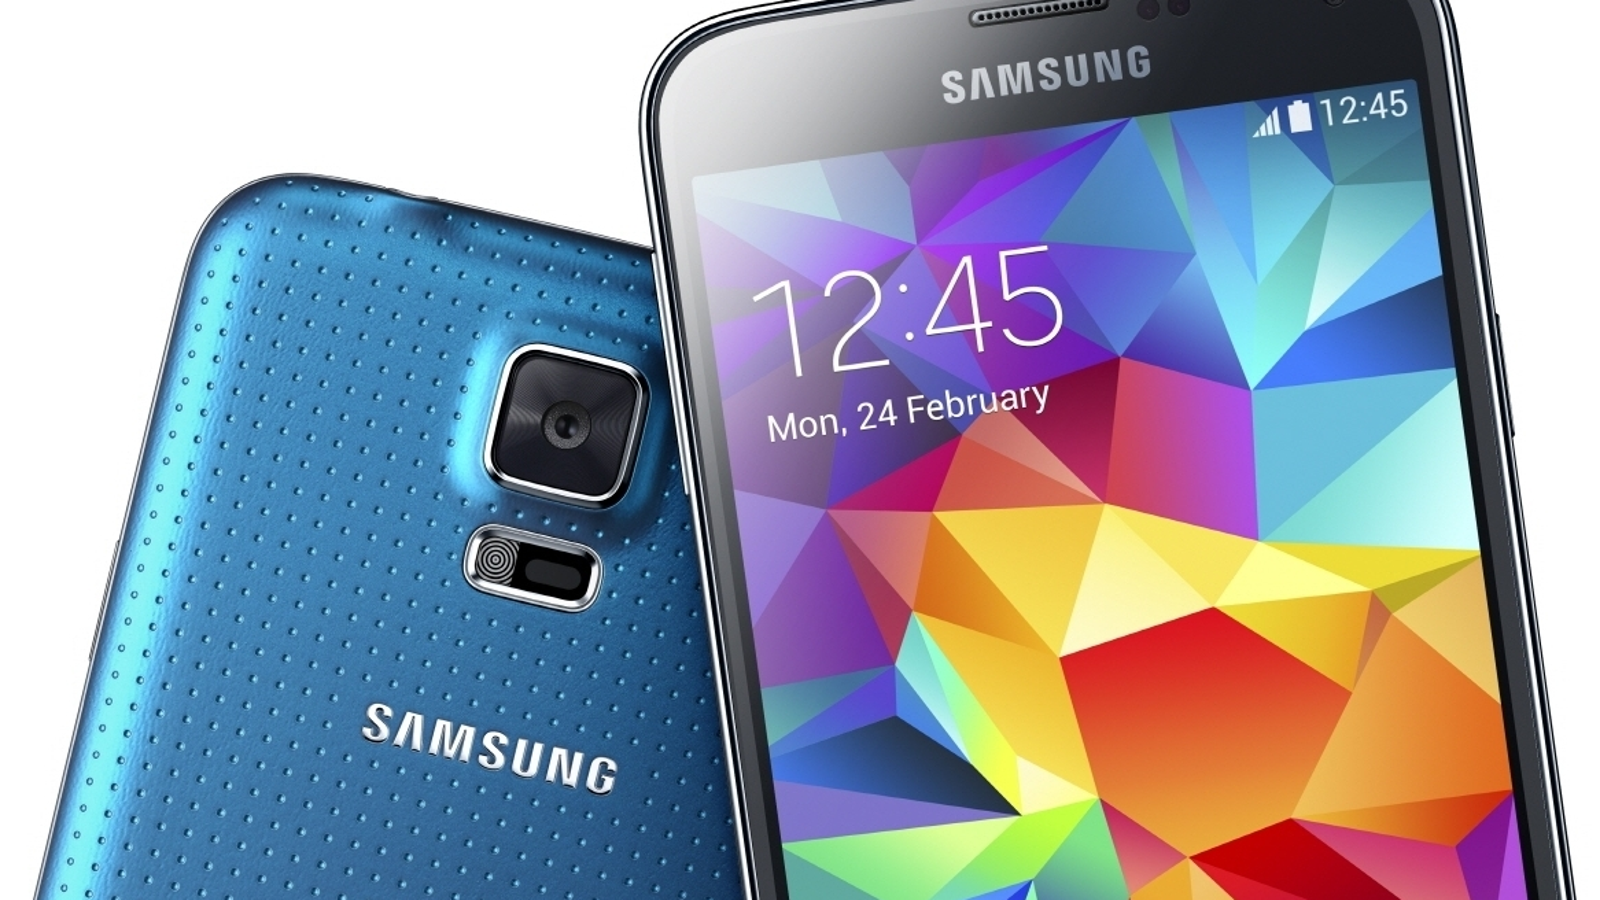 Samsung Galaxy s5 Mini. Самсунг галакси s5. Самсунг галакси а5 6. Самсунг галакси с 24. Галакси купить россия